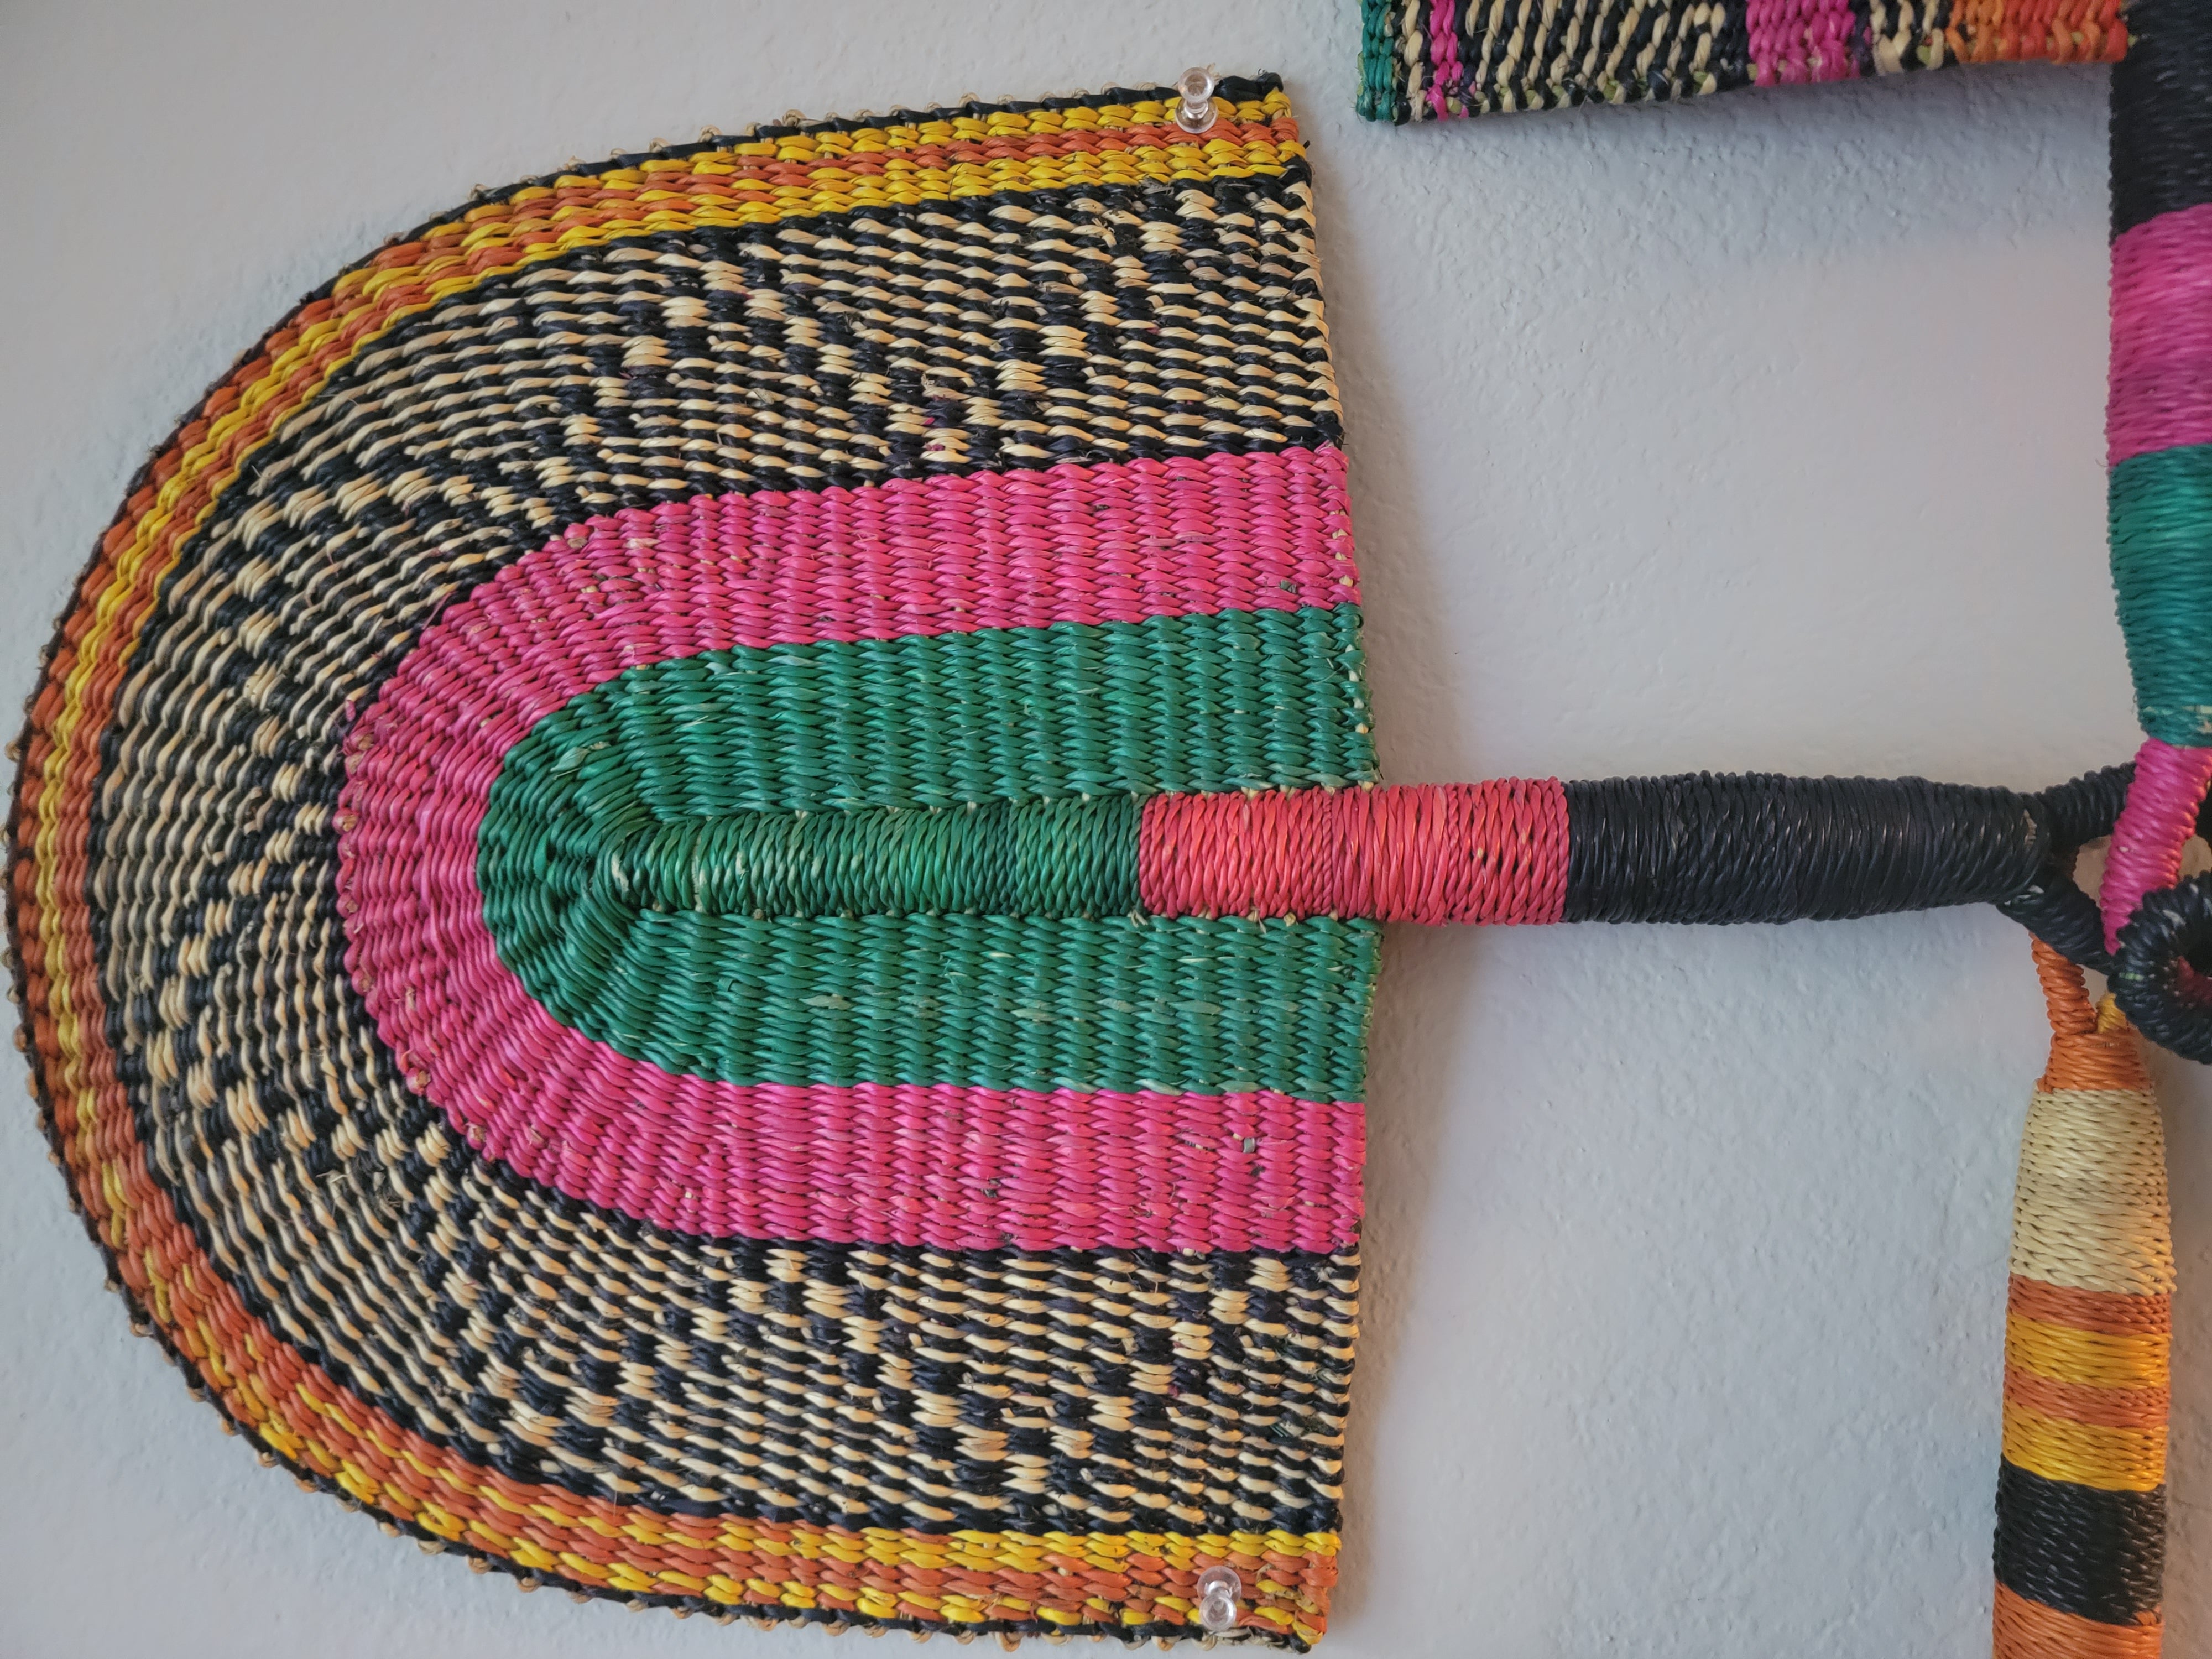 Fan: Burkina Faso Hand Woven